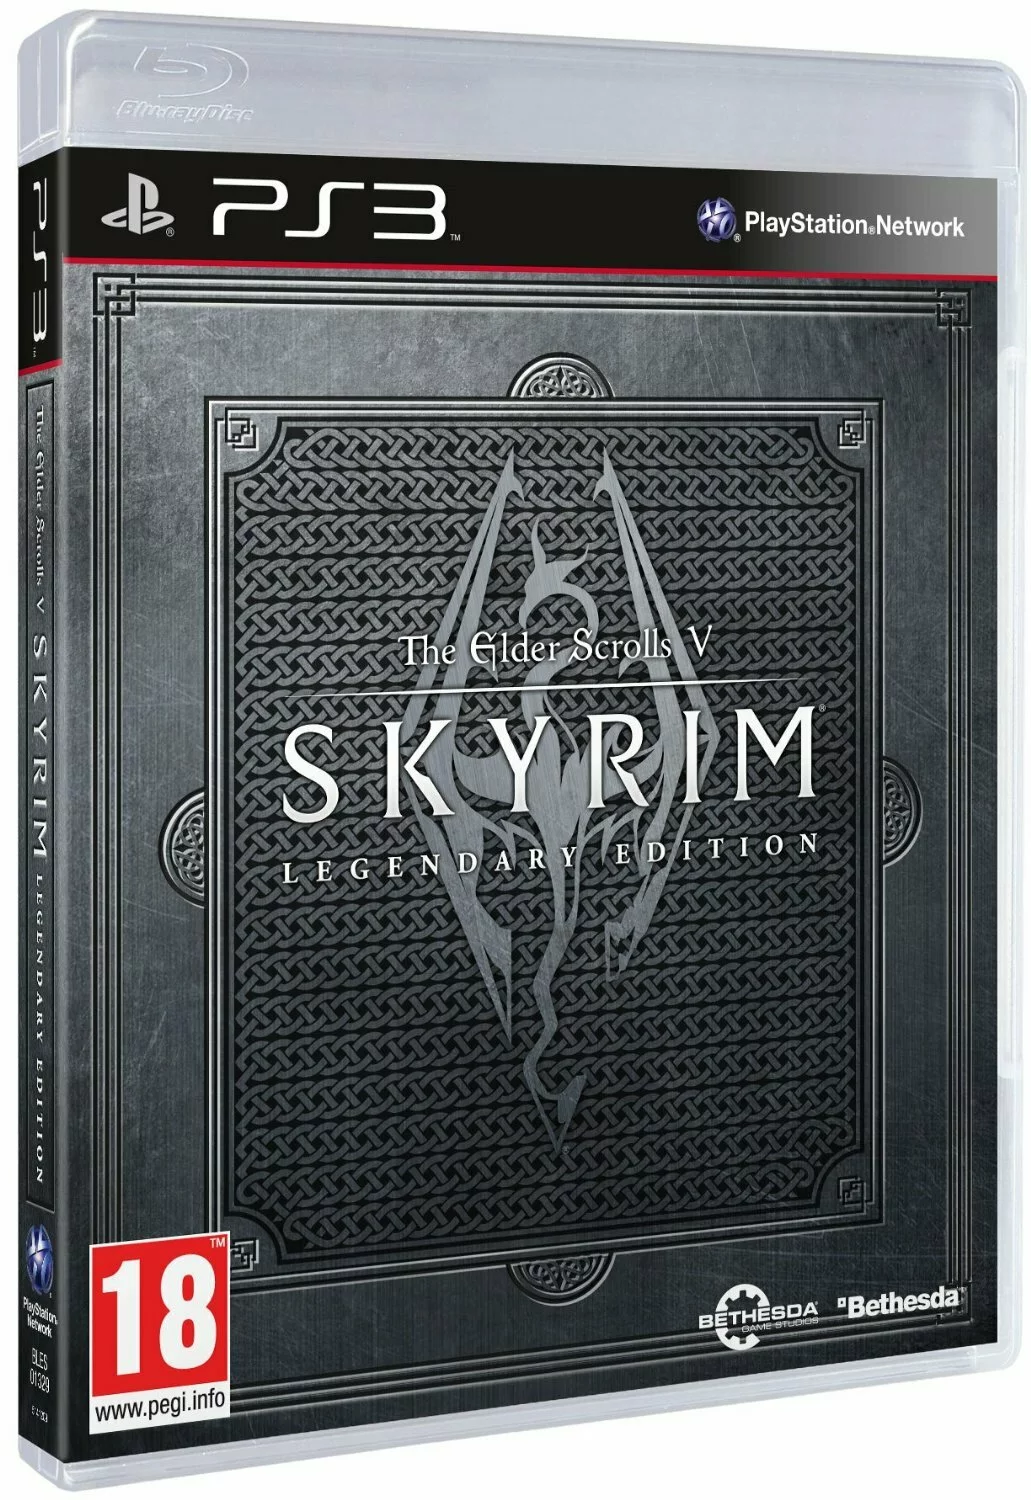 The_Elder_Scrolls_V_Skyrim_Legendary_ Edition_PS3